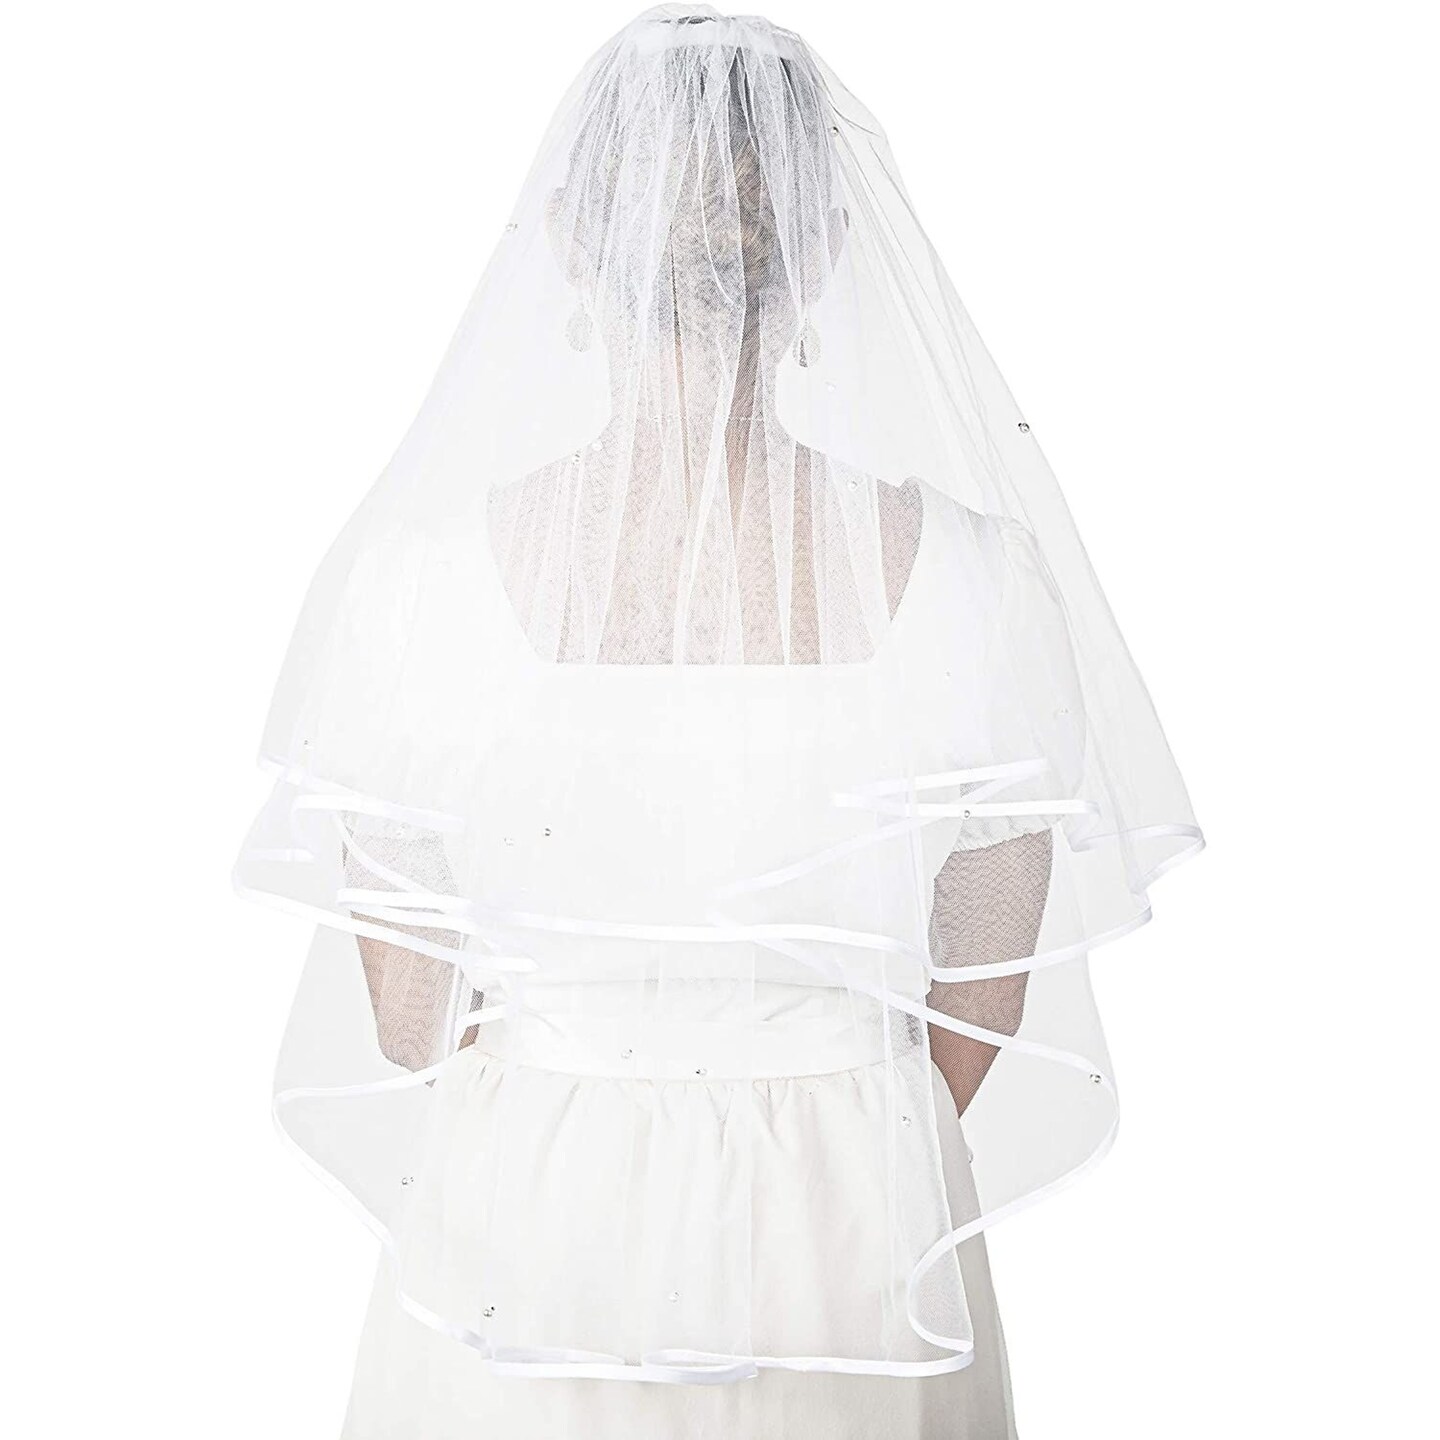 Buy Bridal Shower Veil online